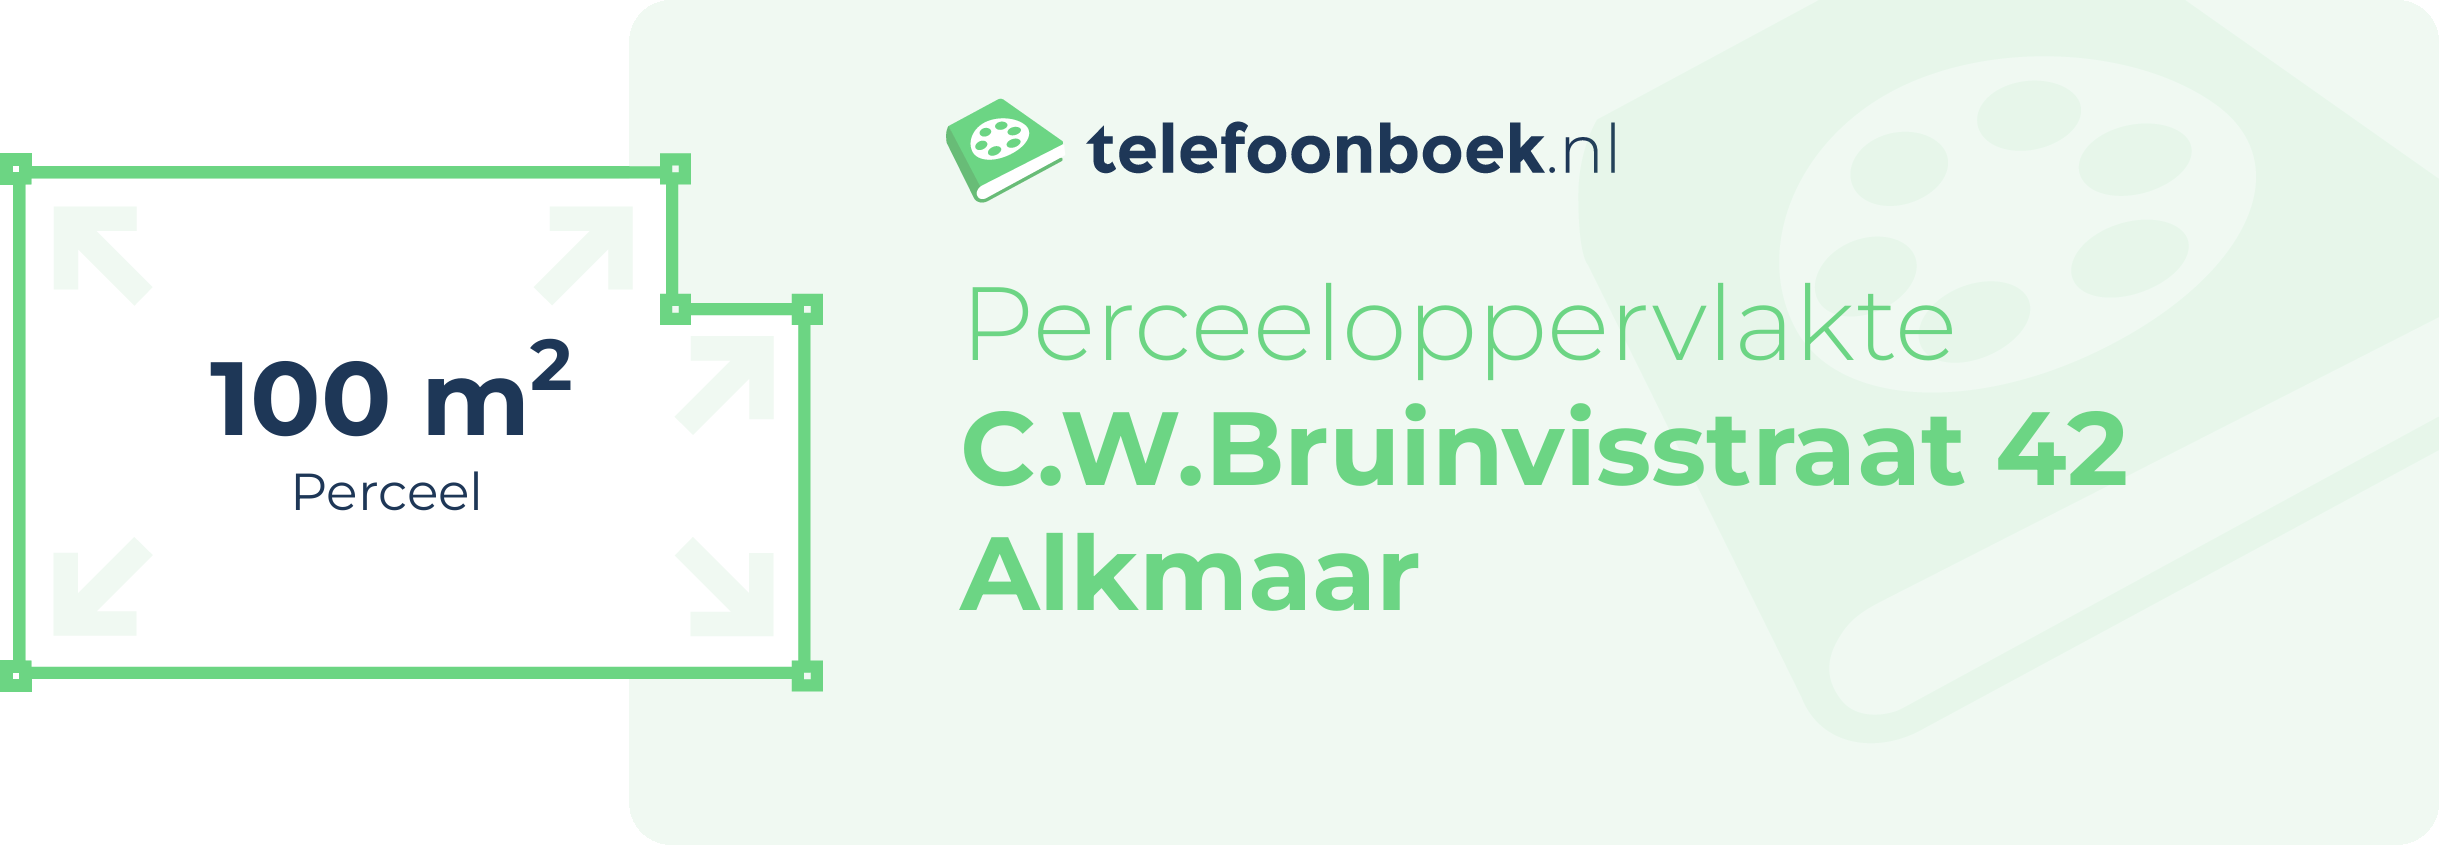 Perceeloppervlakte C.W.Bruinvisstraat 42 Alkmaar